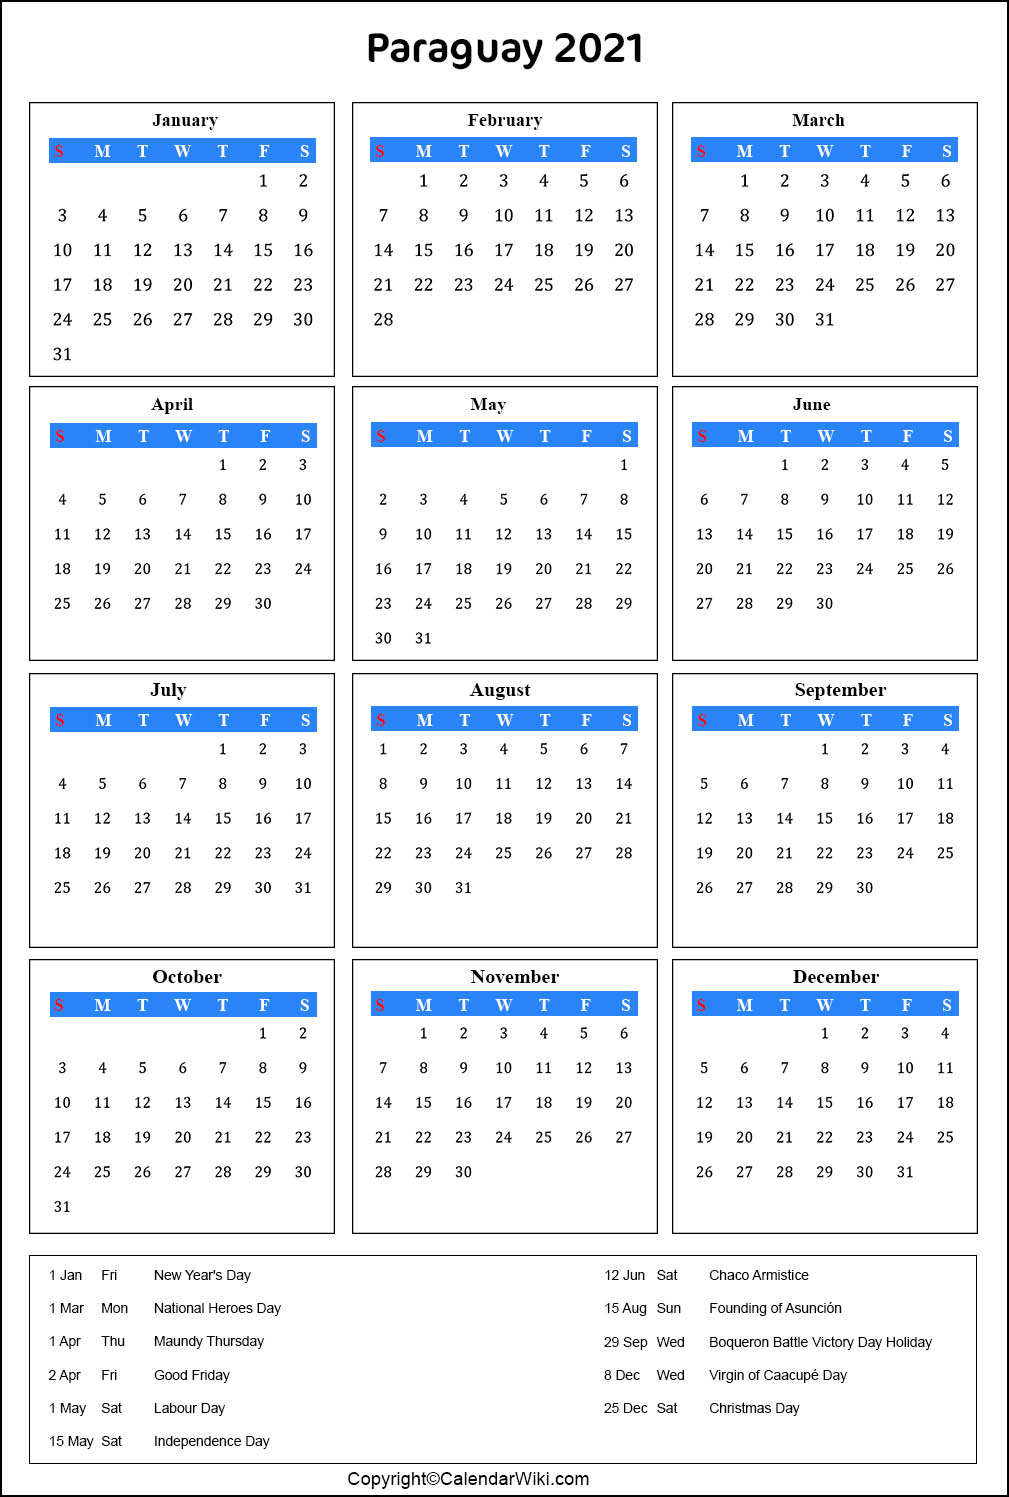 Paraguay Calendar 2021